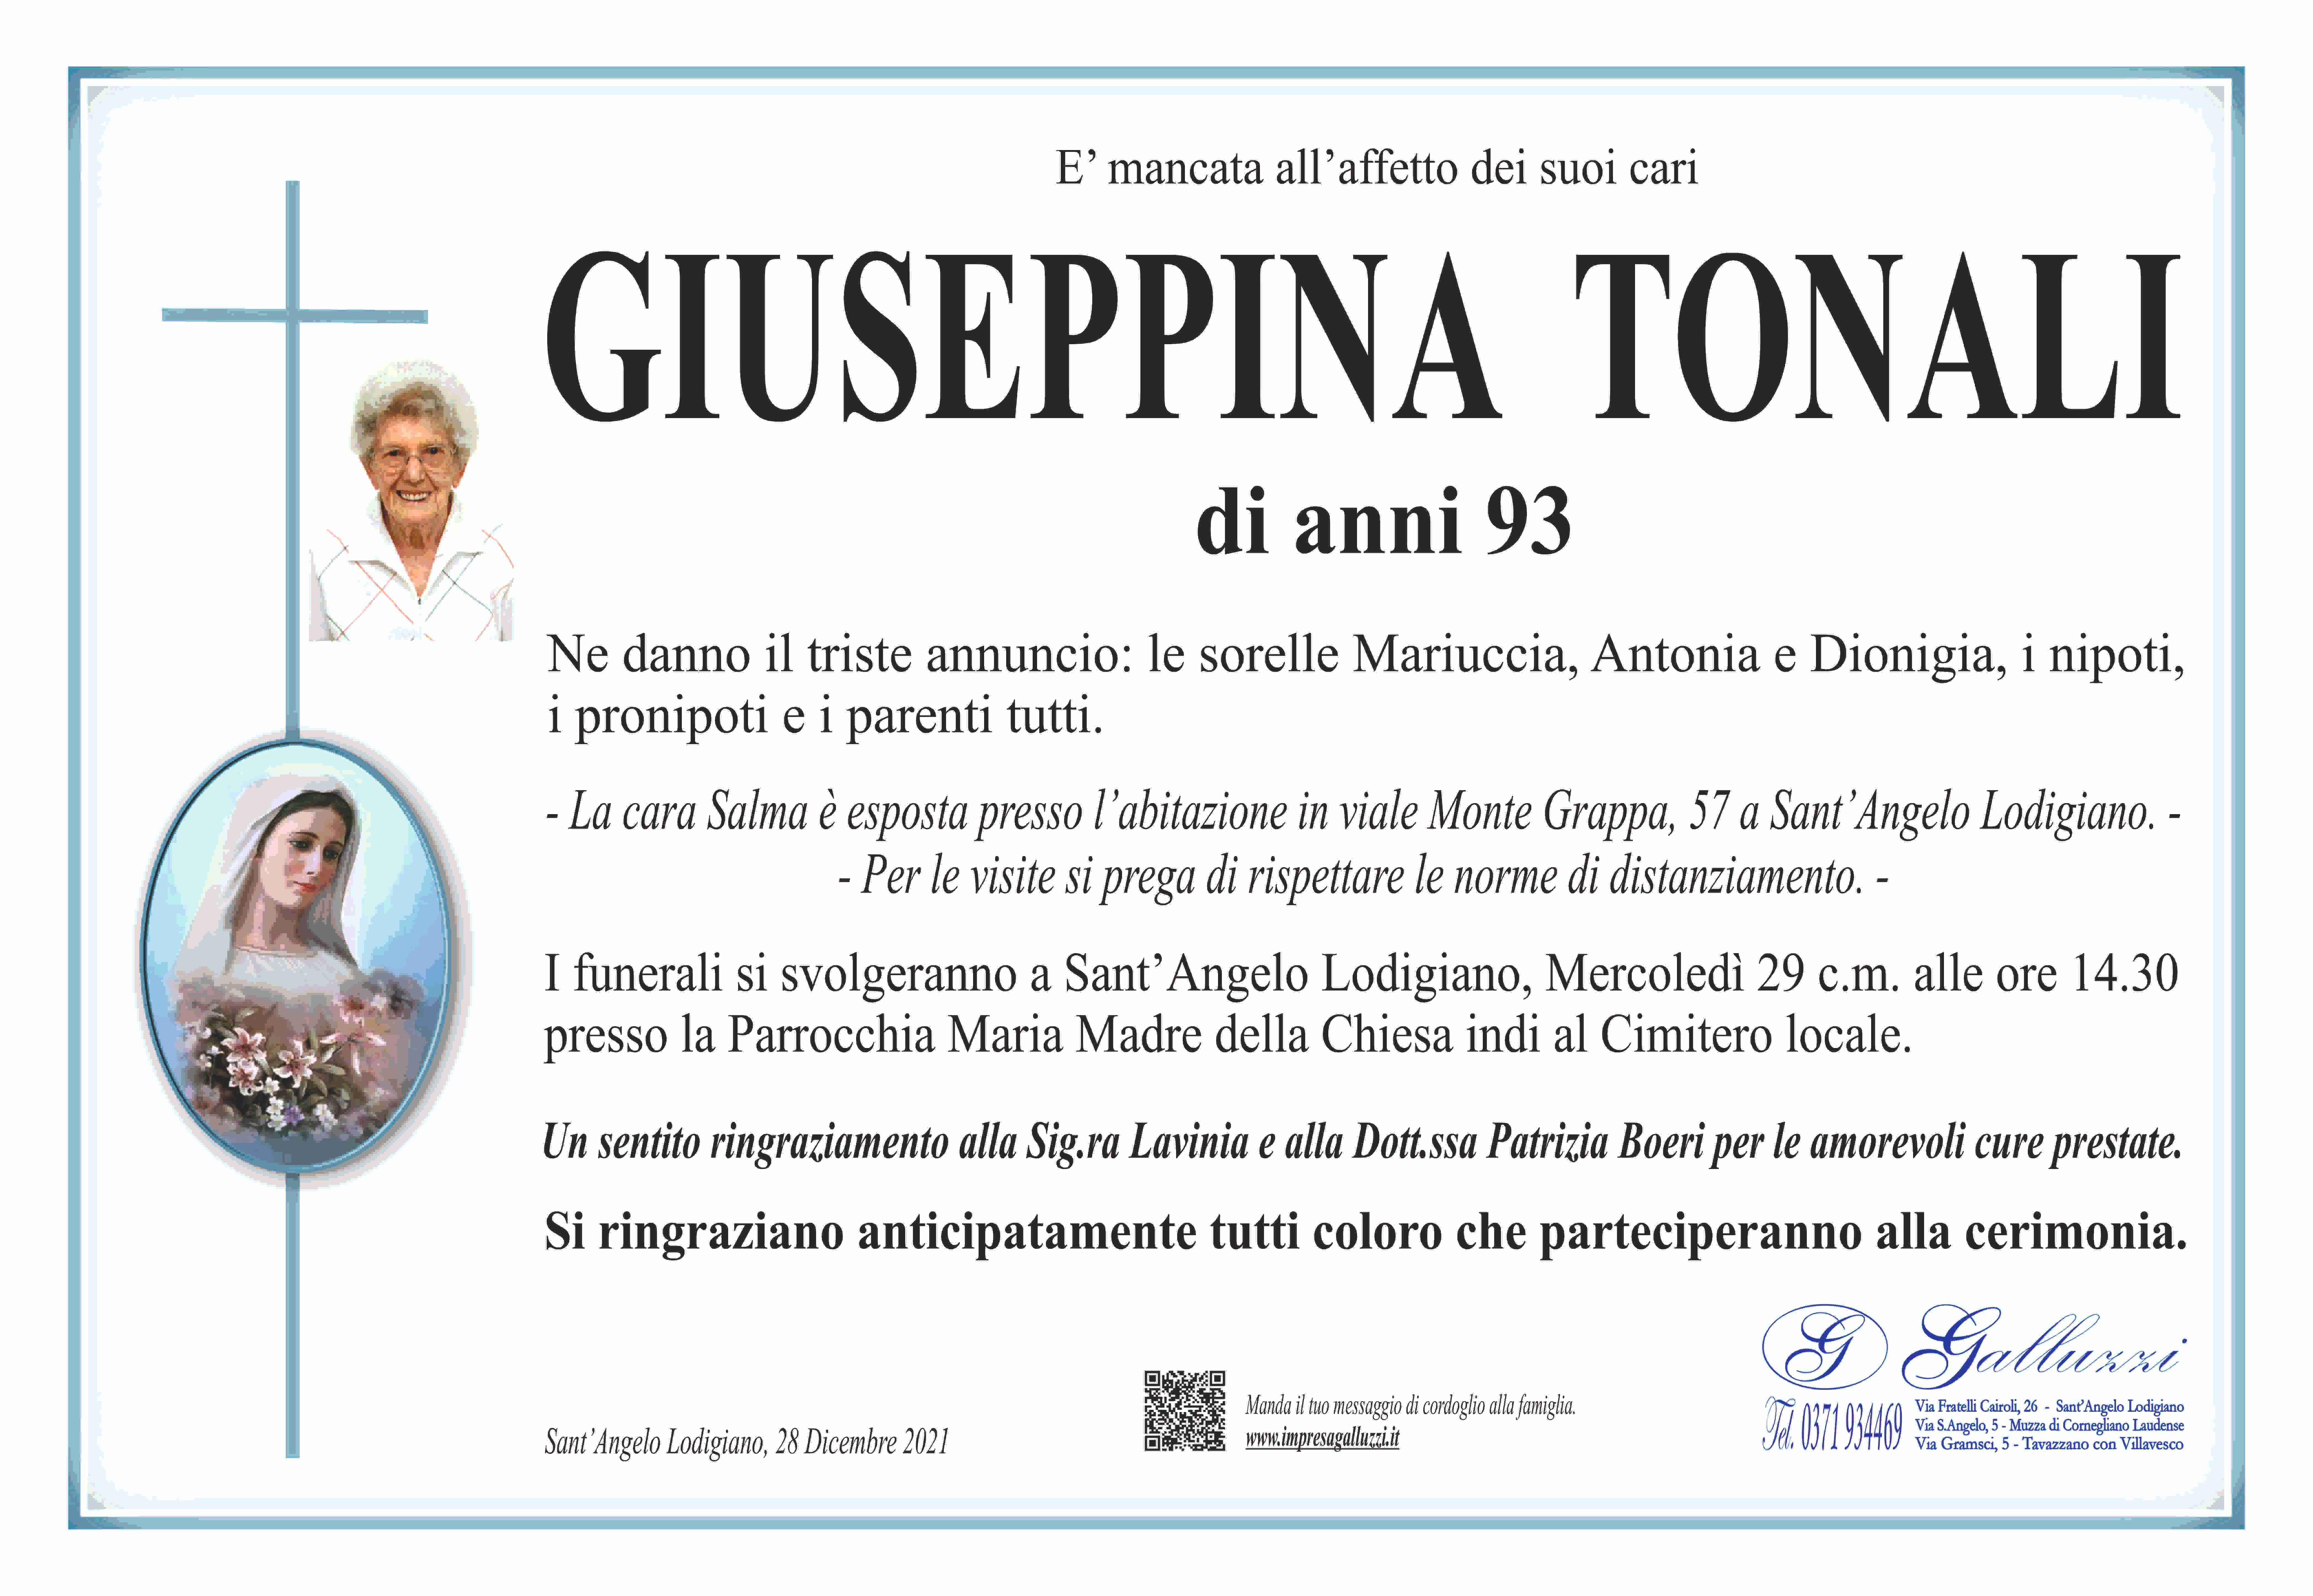 Giuseppina Tonali